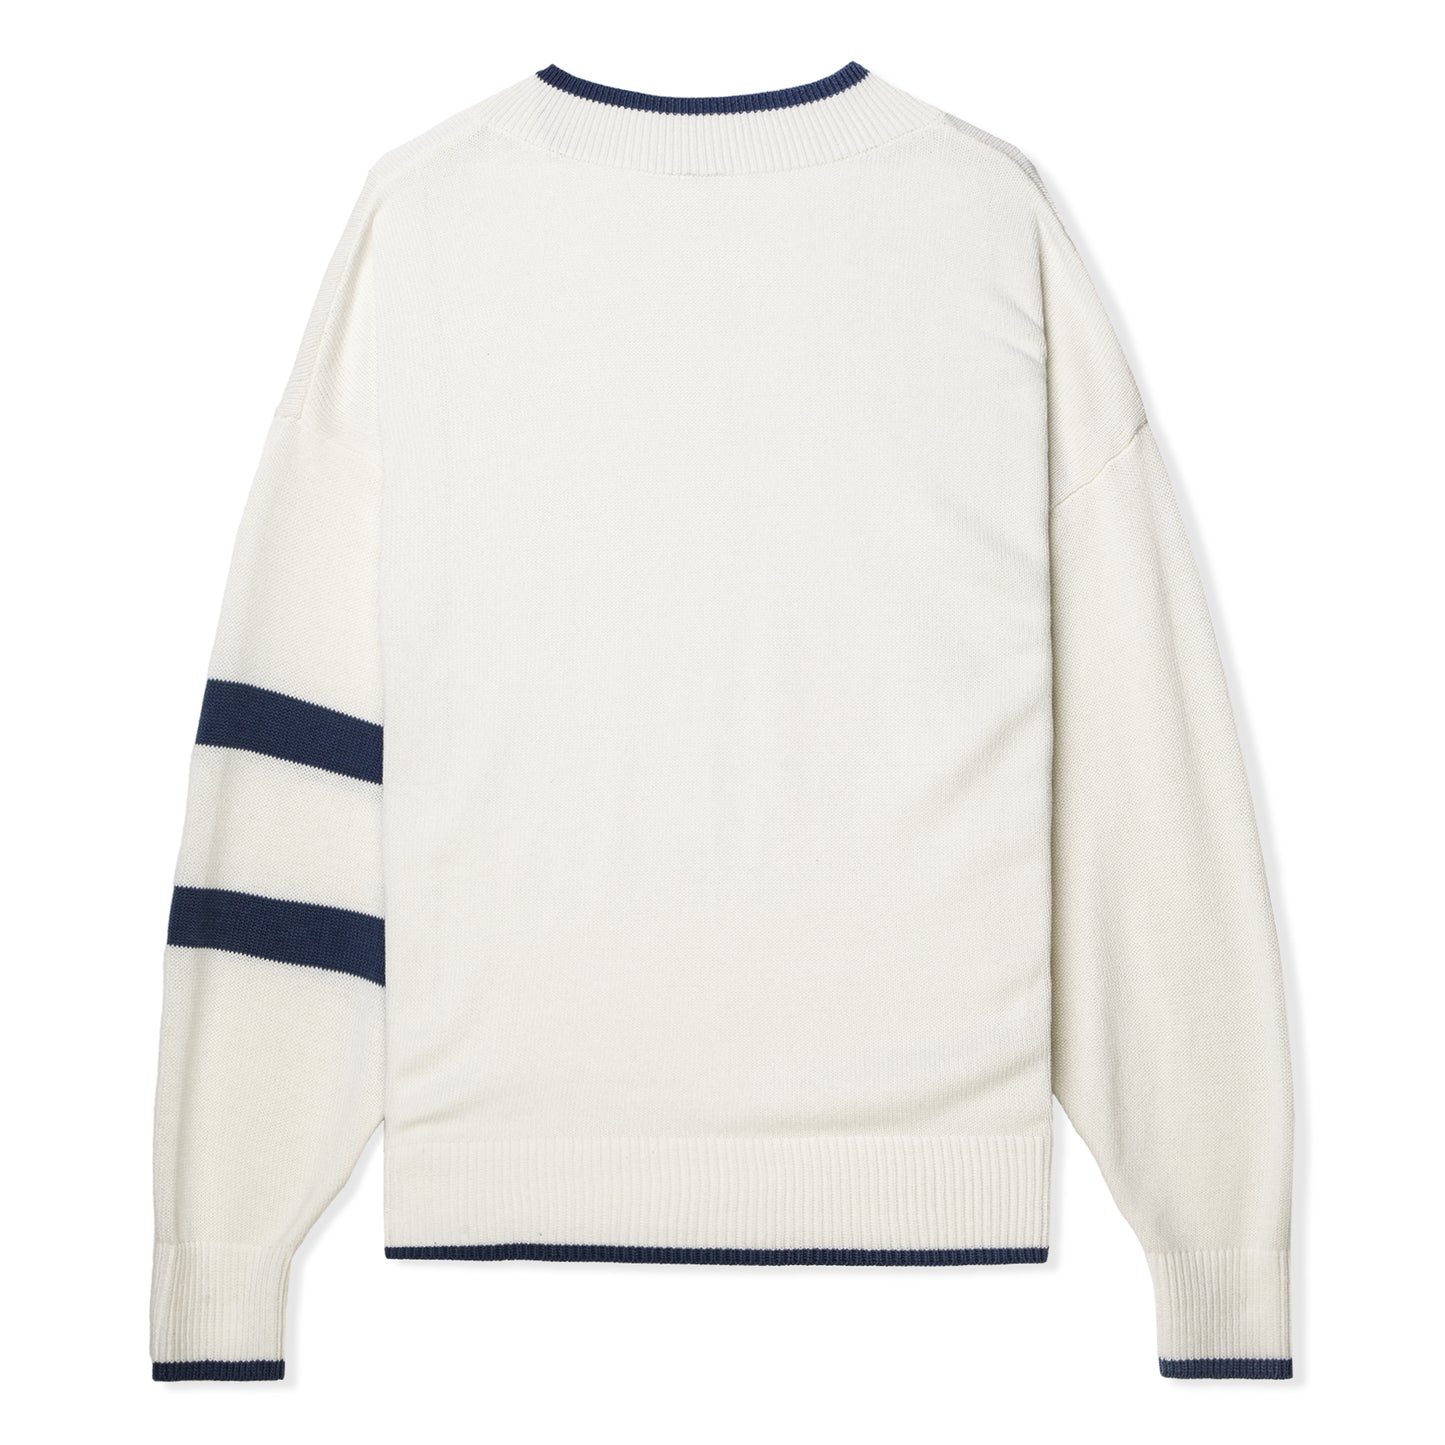 Nike Sportswear Sweater (Sail/Diffused Blue/Black)